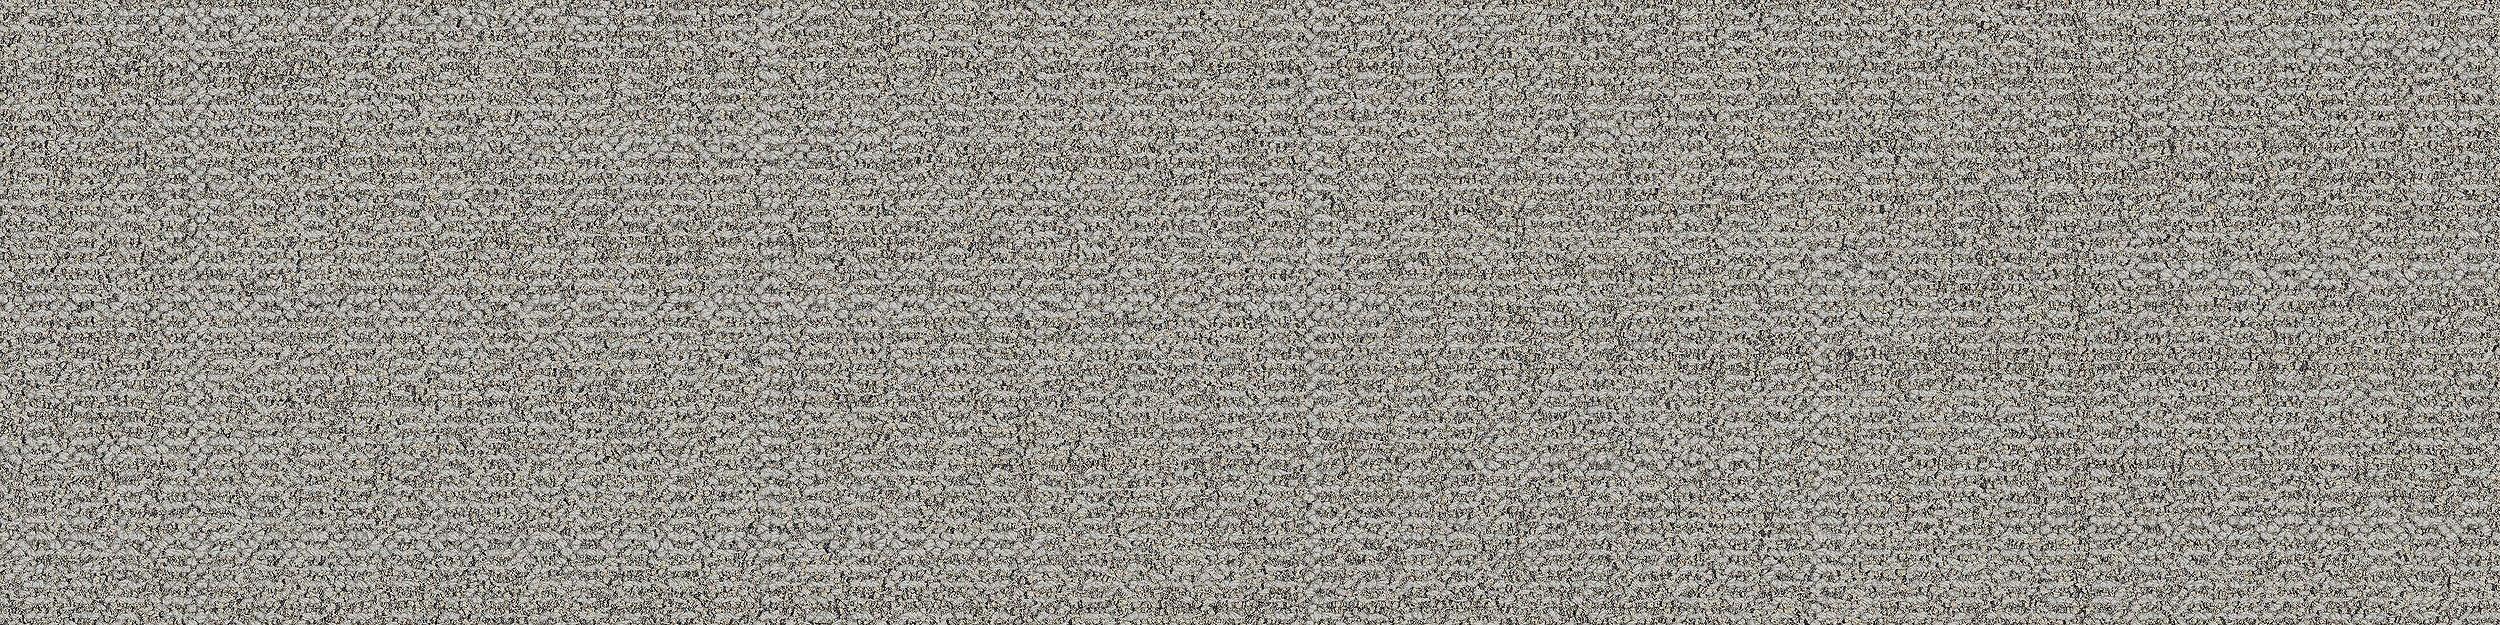 Open Air 401 Carpet Tile In Linen número de imagen 6